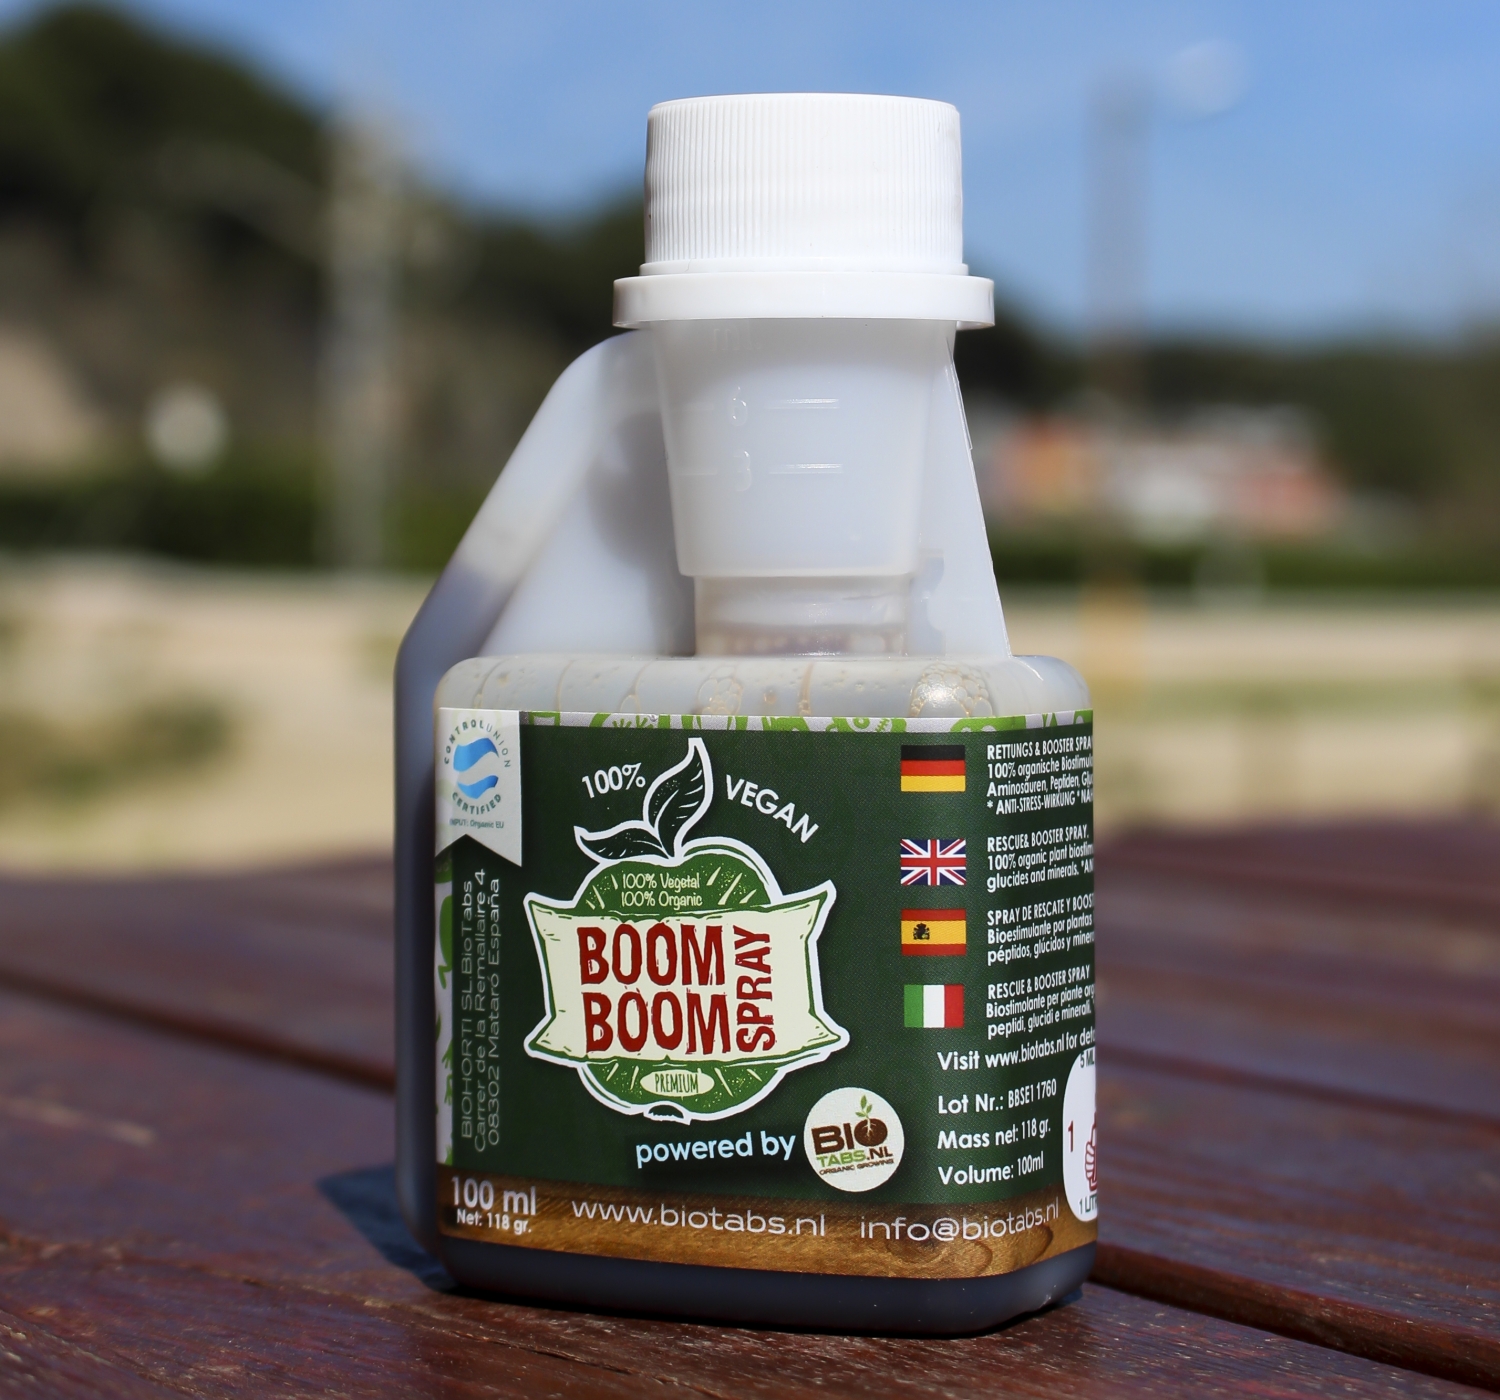 BoomBoom Spray by Bio Tabs